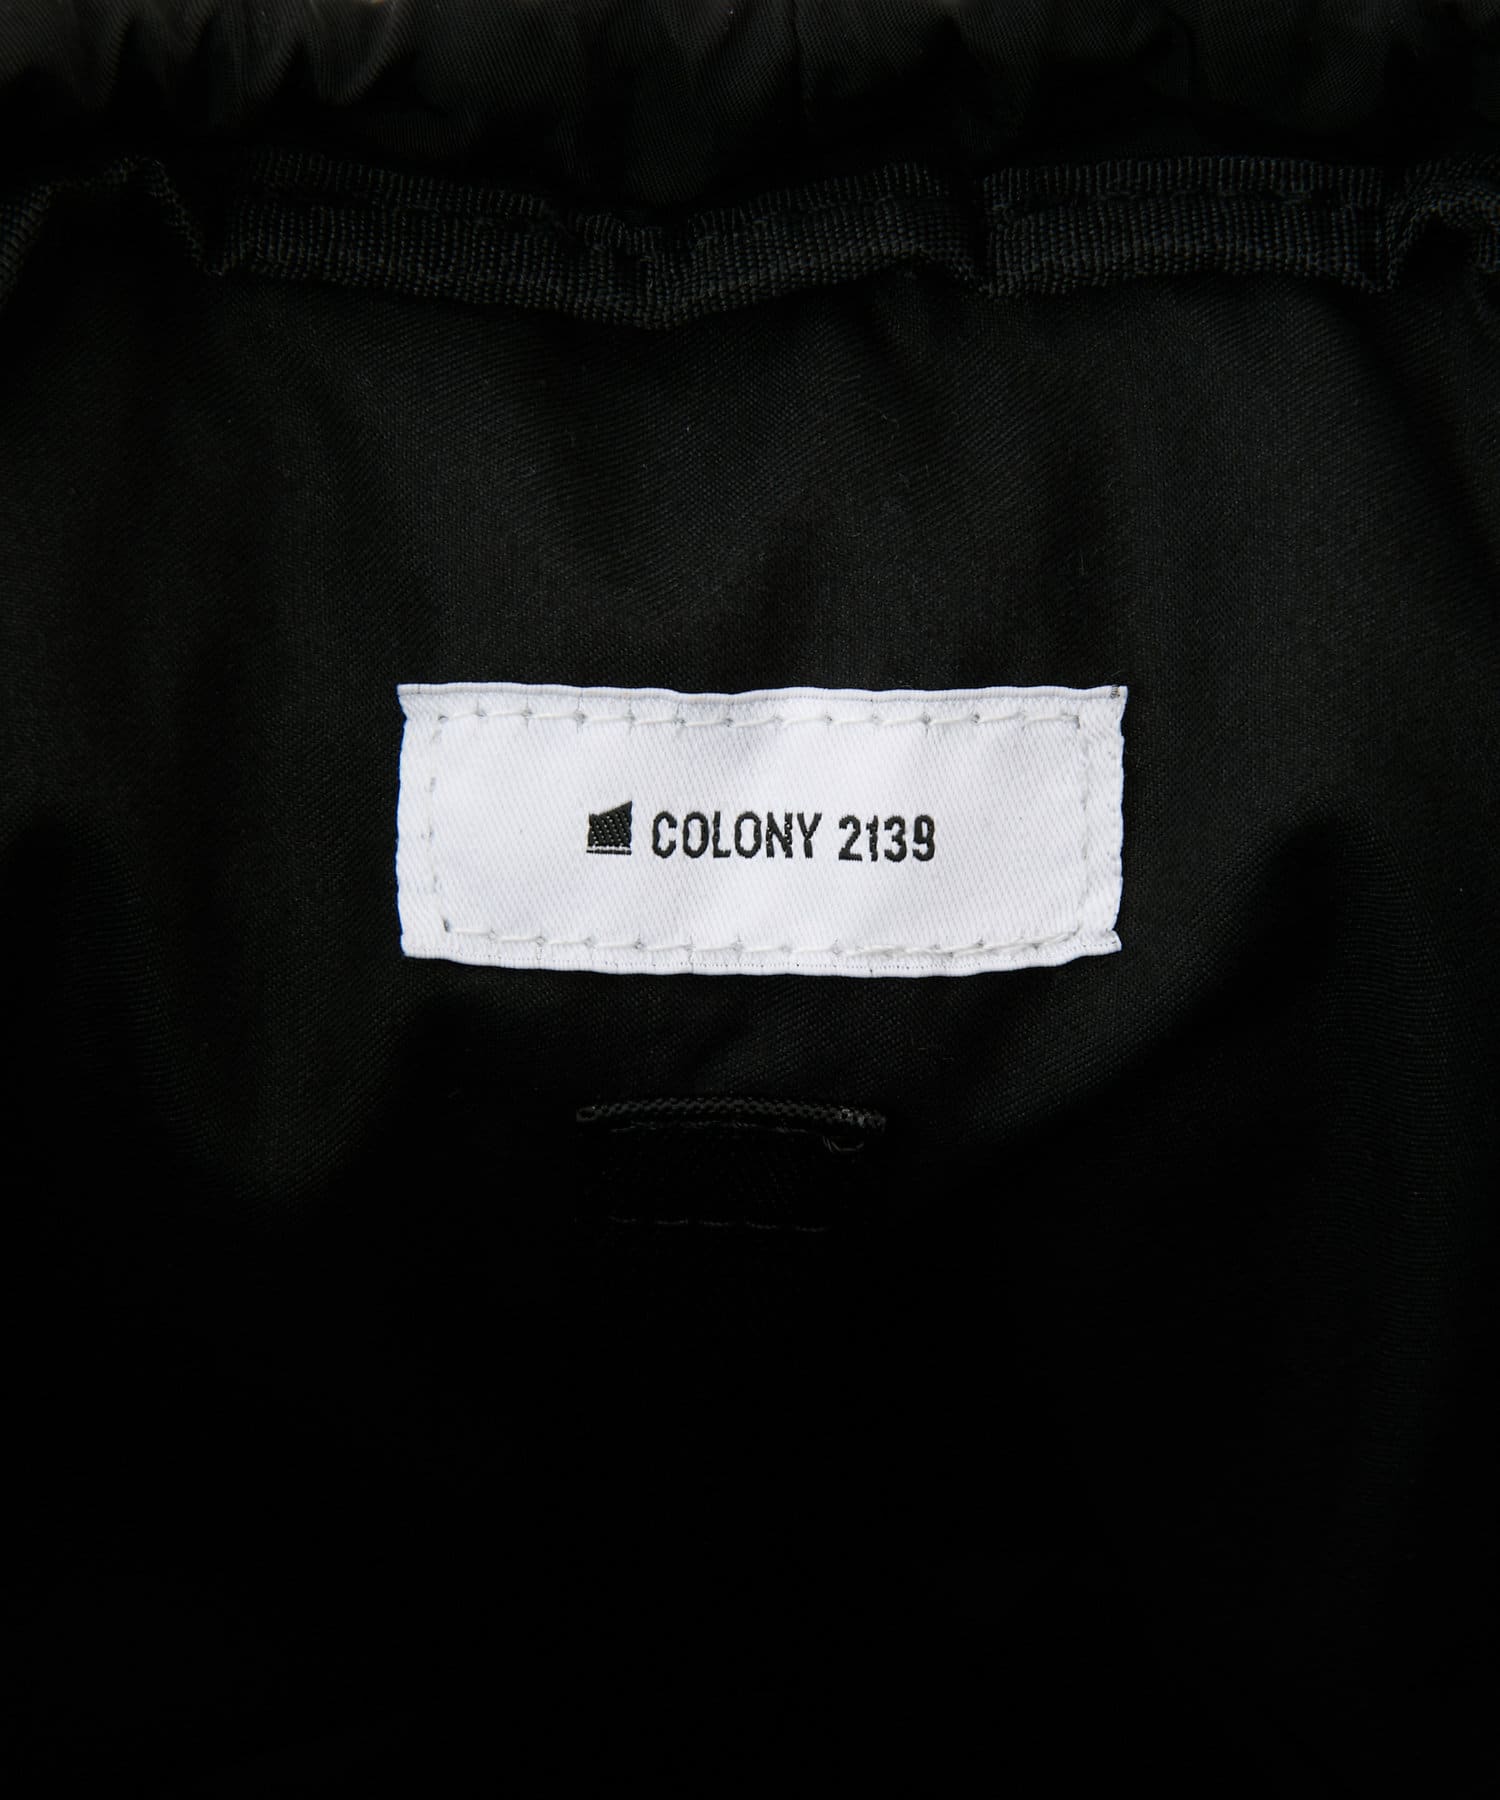 COLONY 2139(コロニー トゥーワンスリーナイン) ドロストパファーリュック